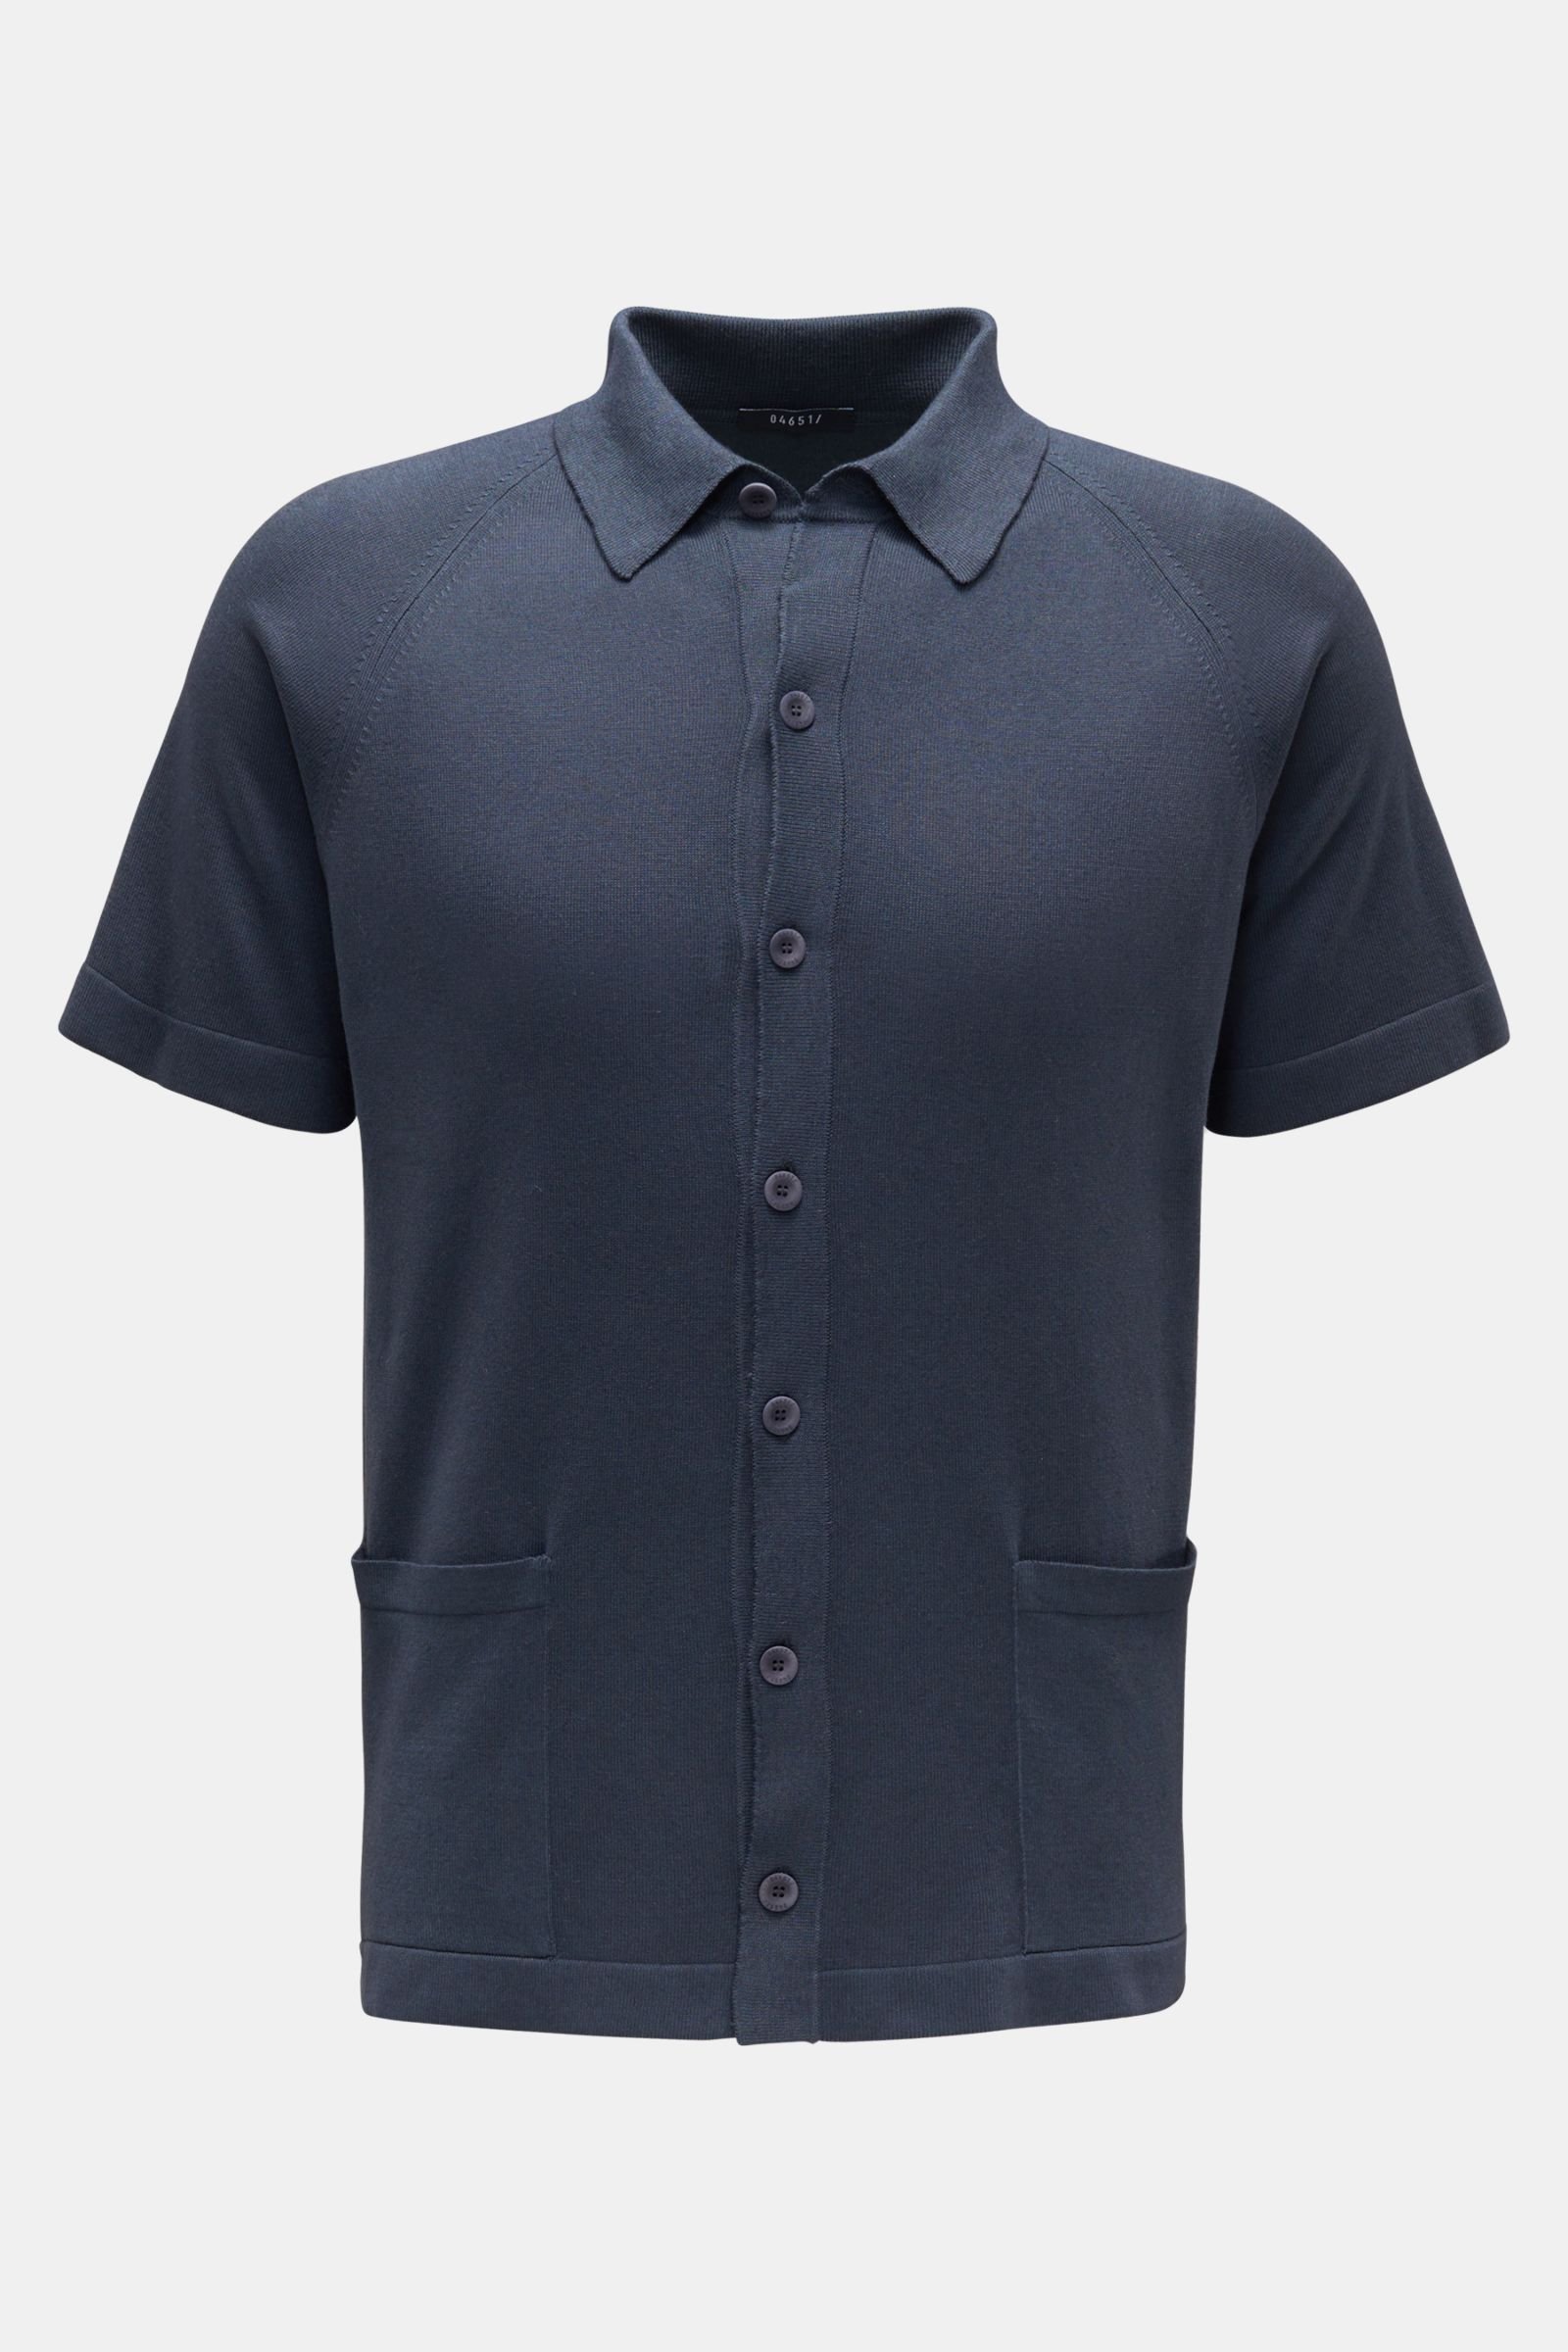 Kurzarm-Strickhemd 'Foggy Shirt' schmaler Kragen navy